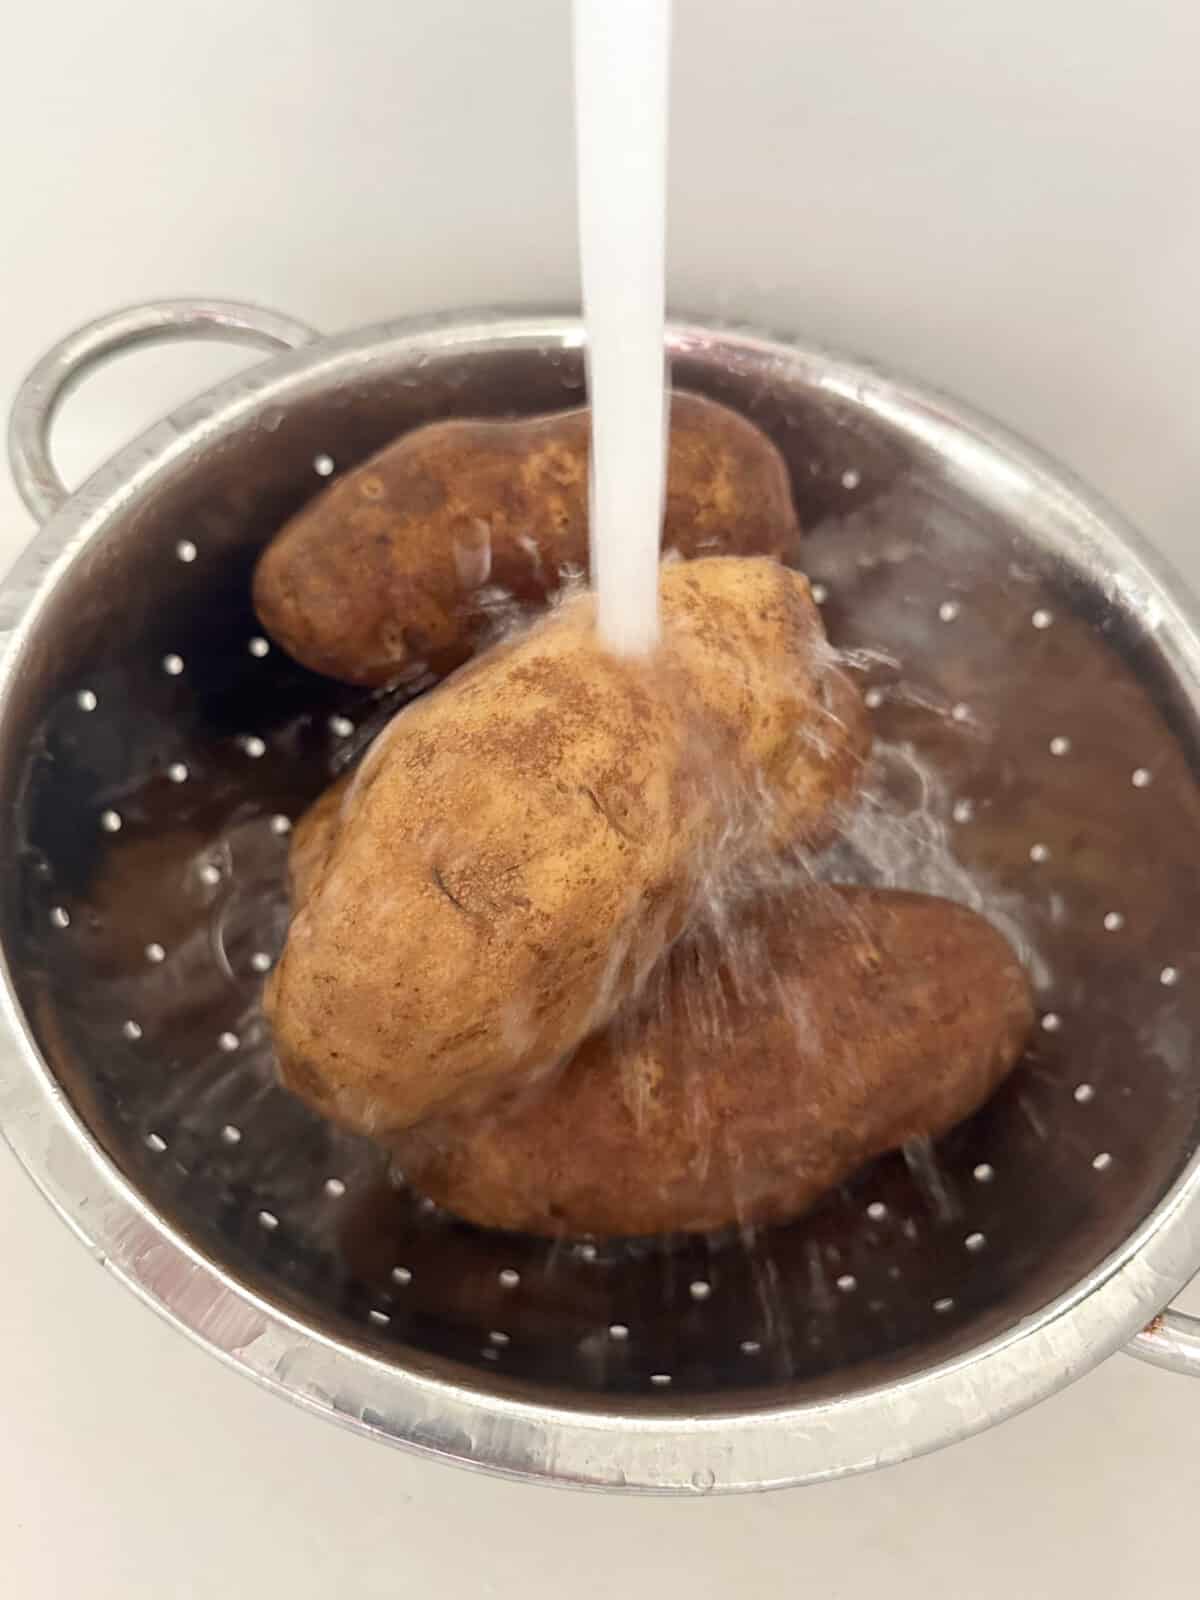 washing potatoes in colander